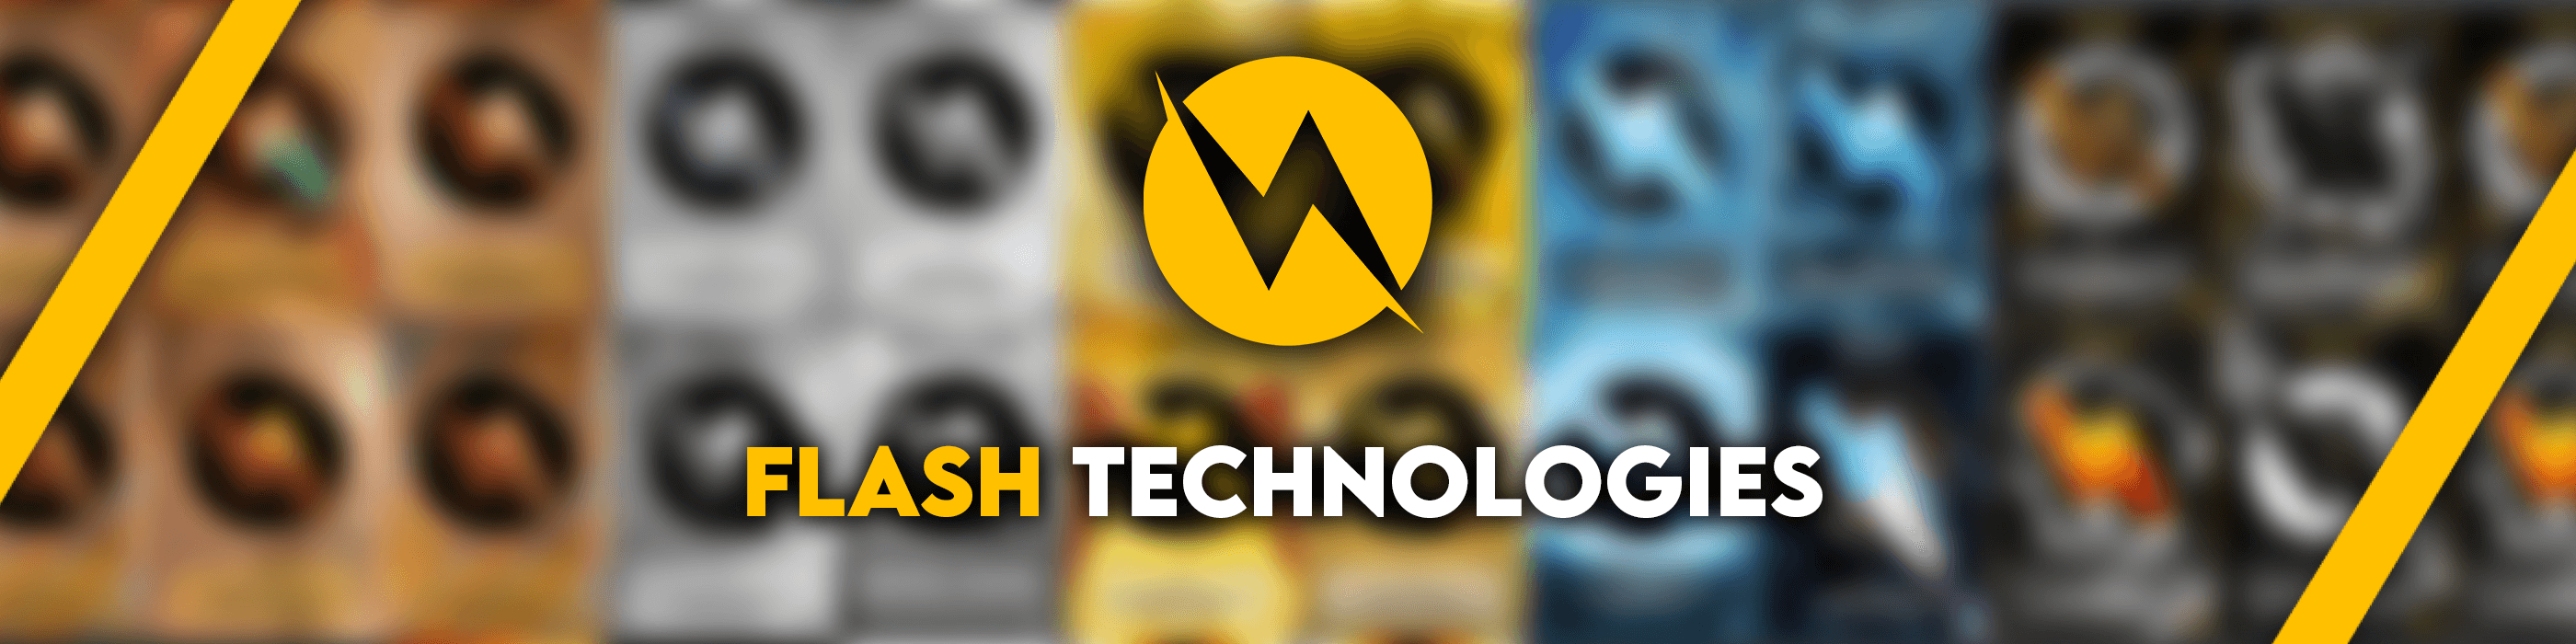 Flash_Technologies banner